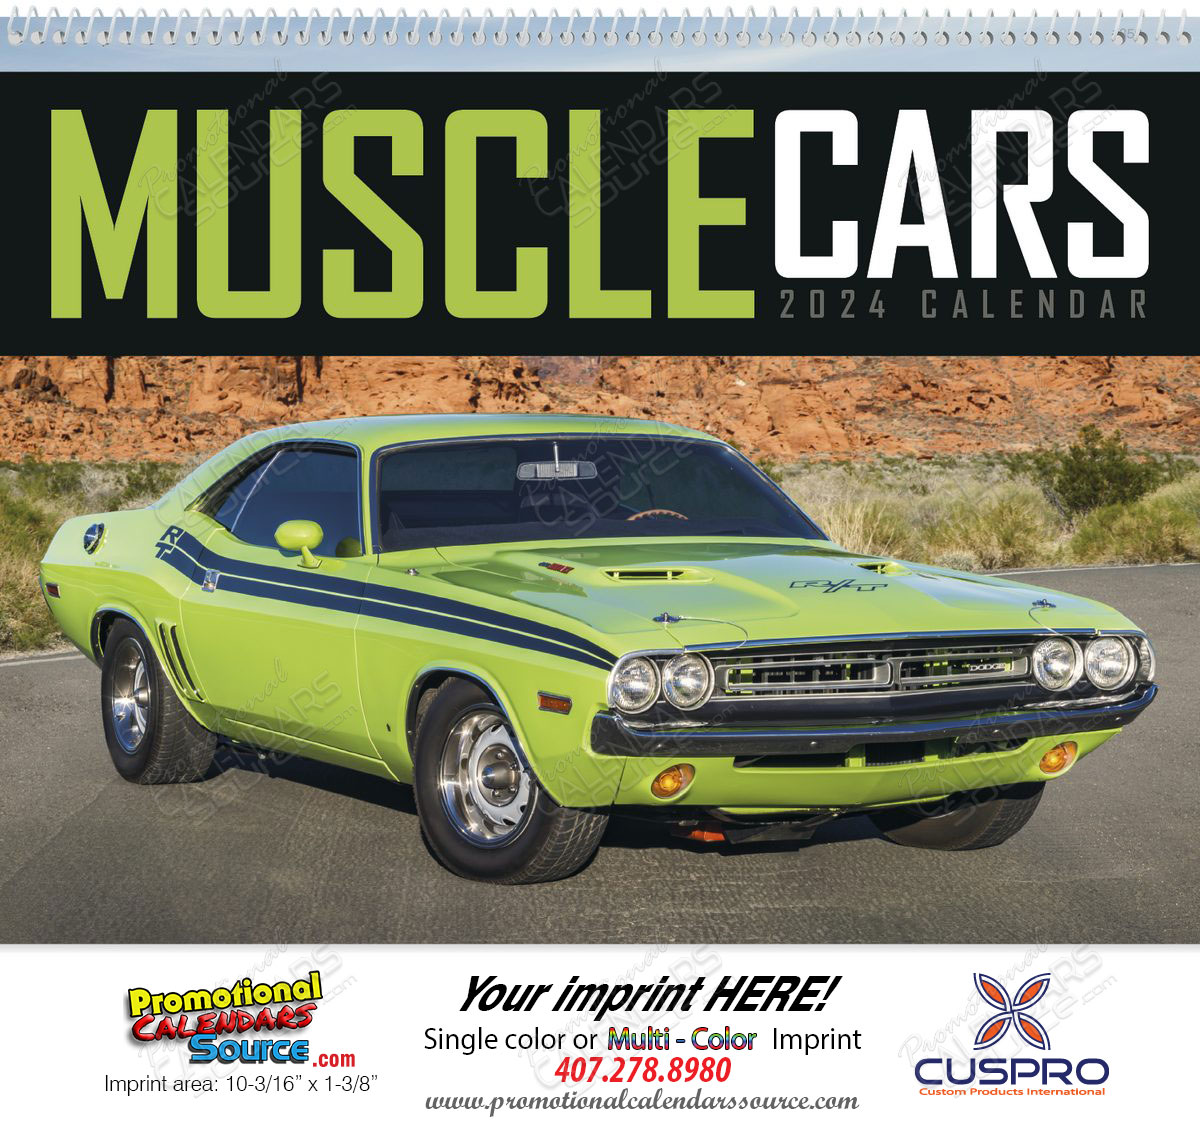 Muscle Cars Promotional Calendar 